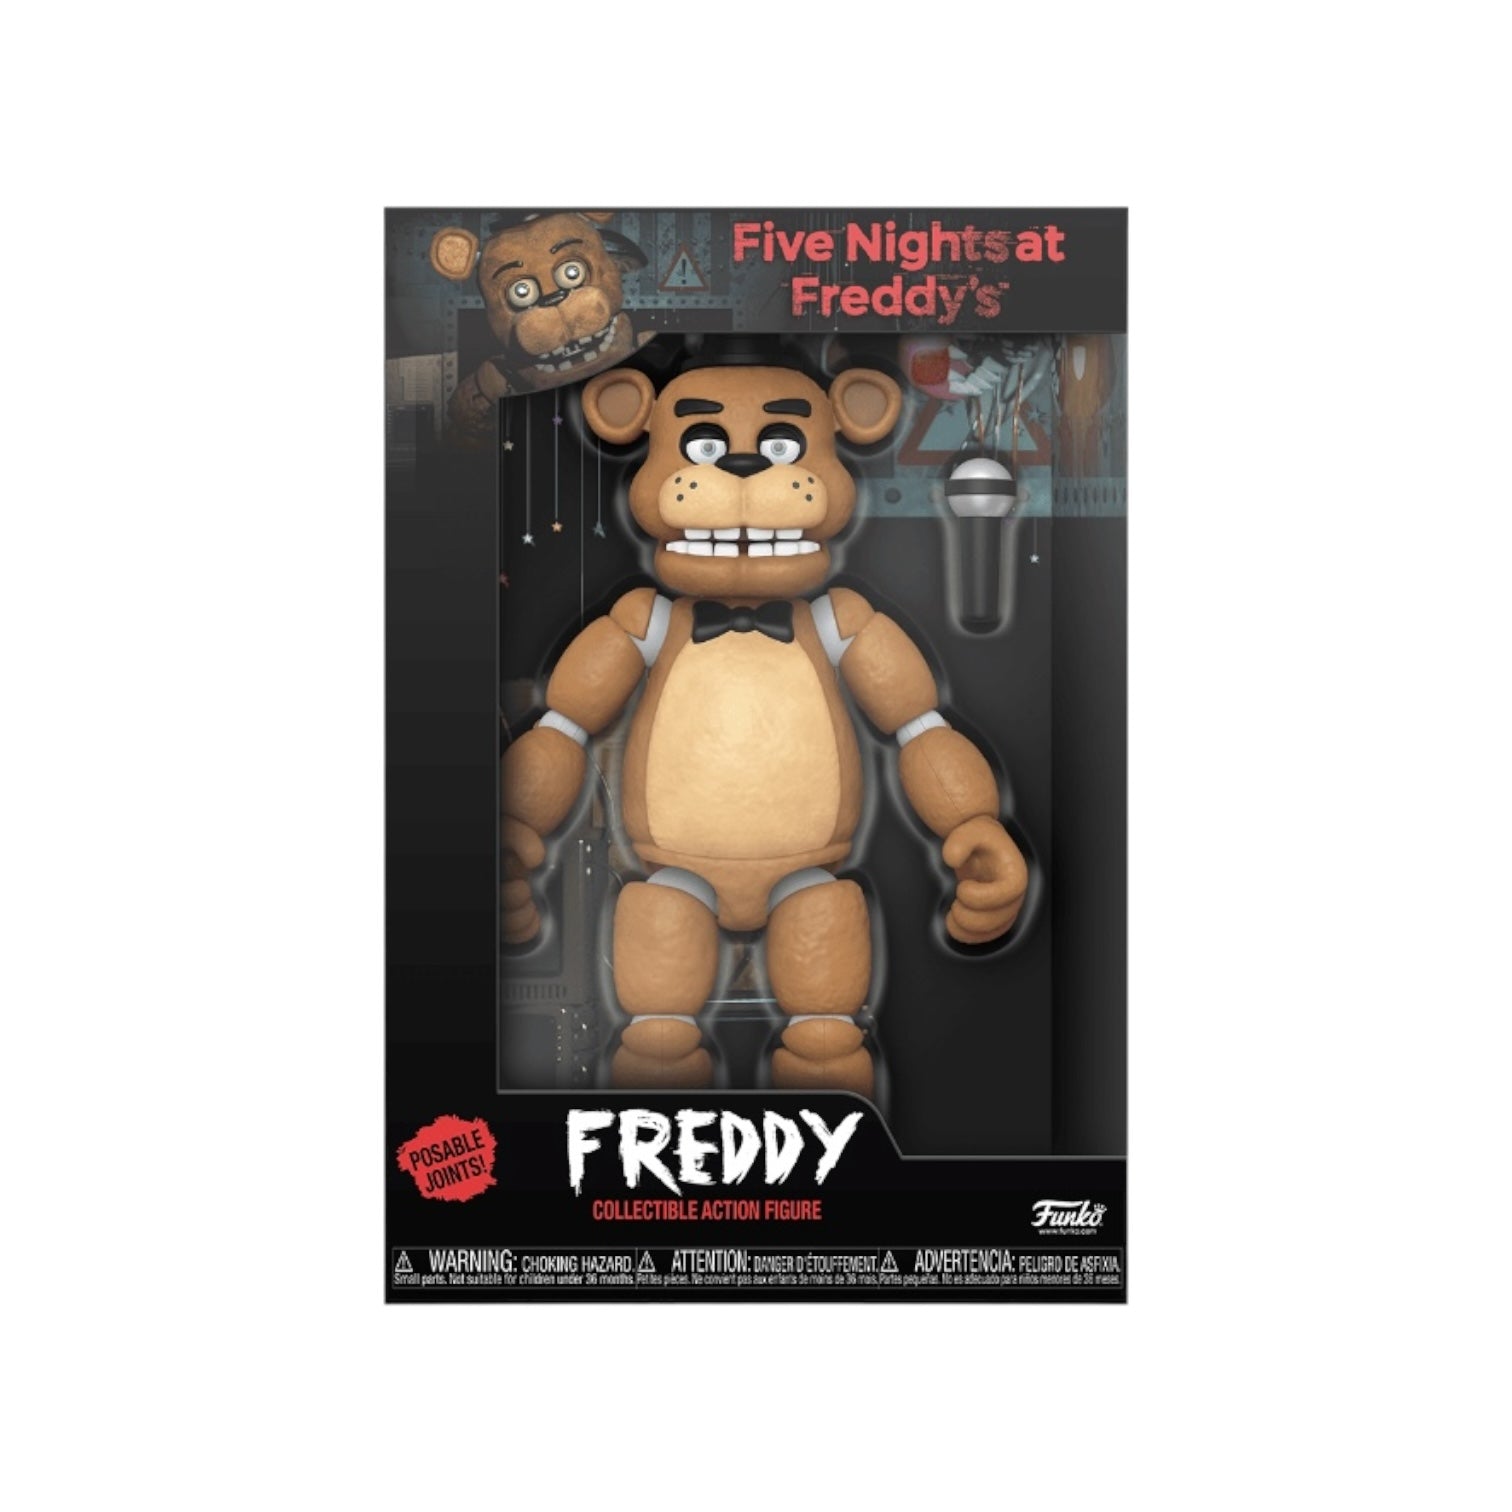 Freddy Fazbear 13.5 inch Funko Action Figure - Five Nights at Freddy's